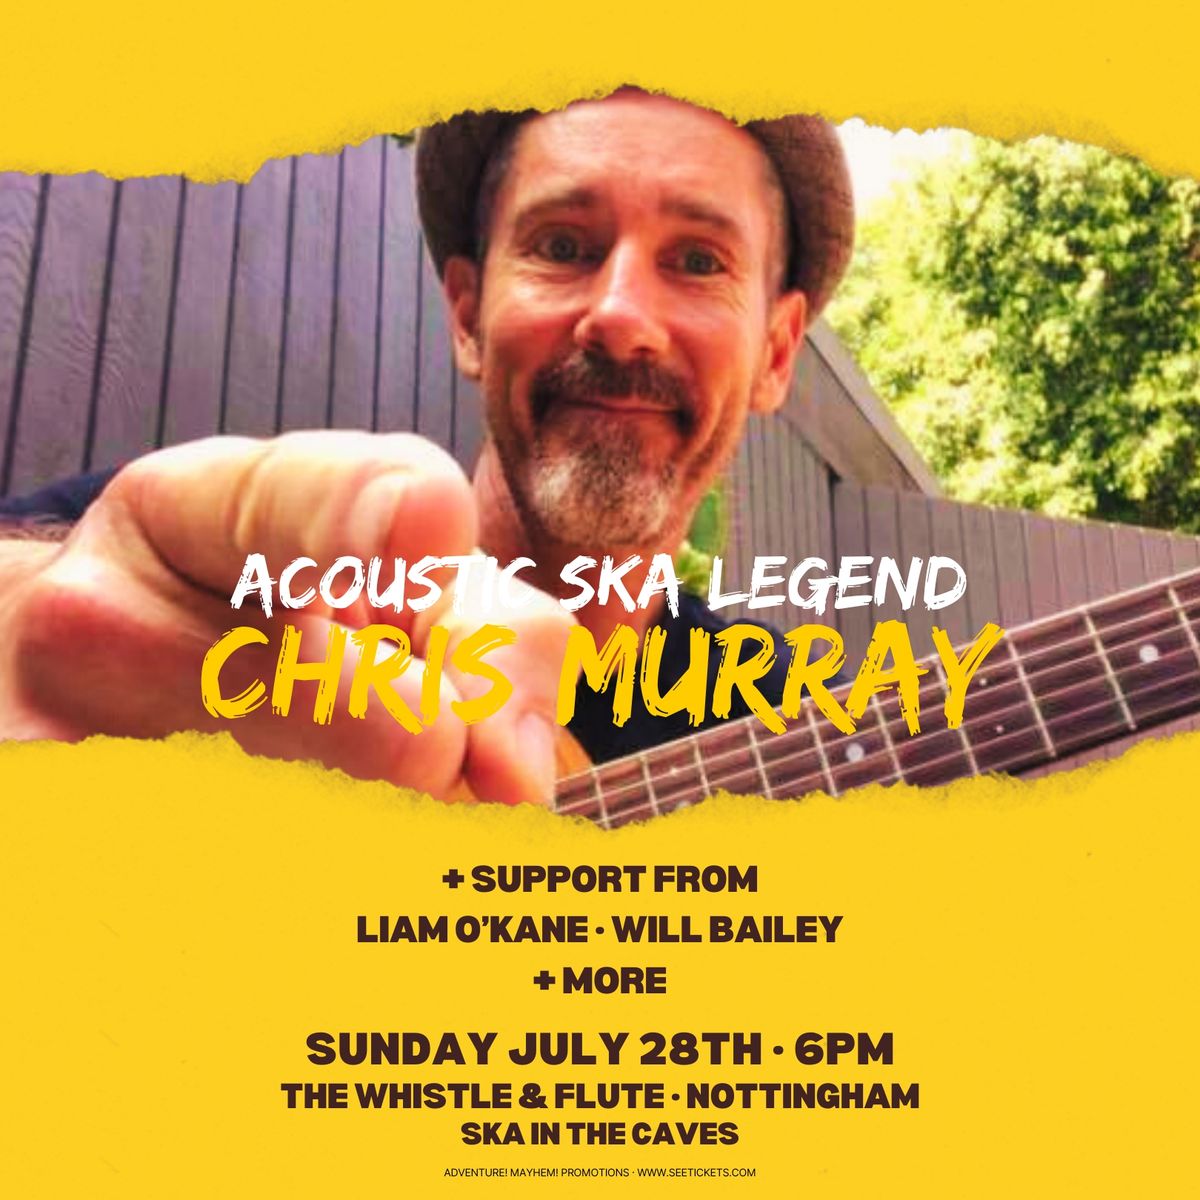 Chris Murray - Acoustic ska legend